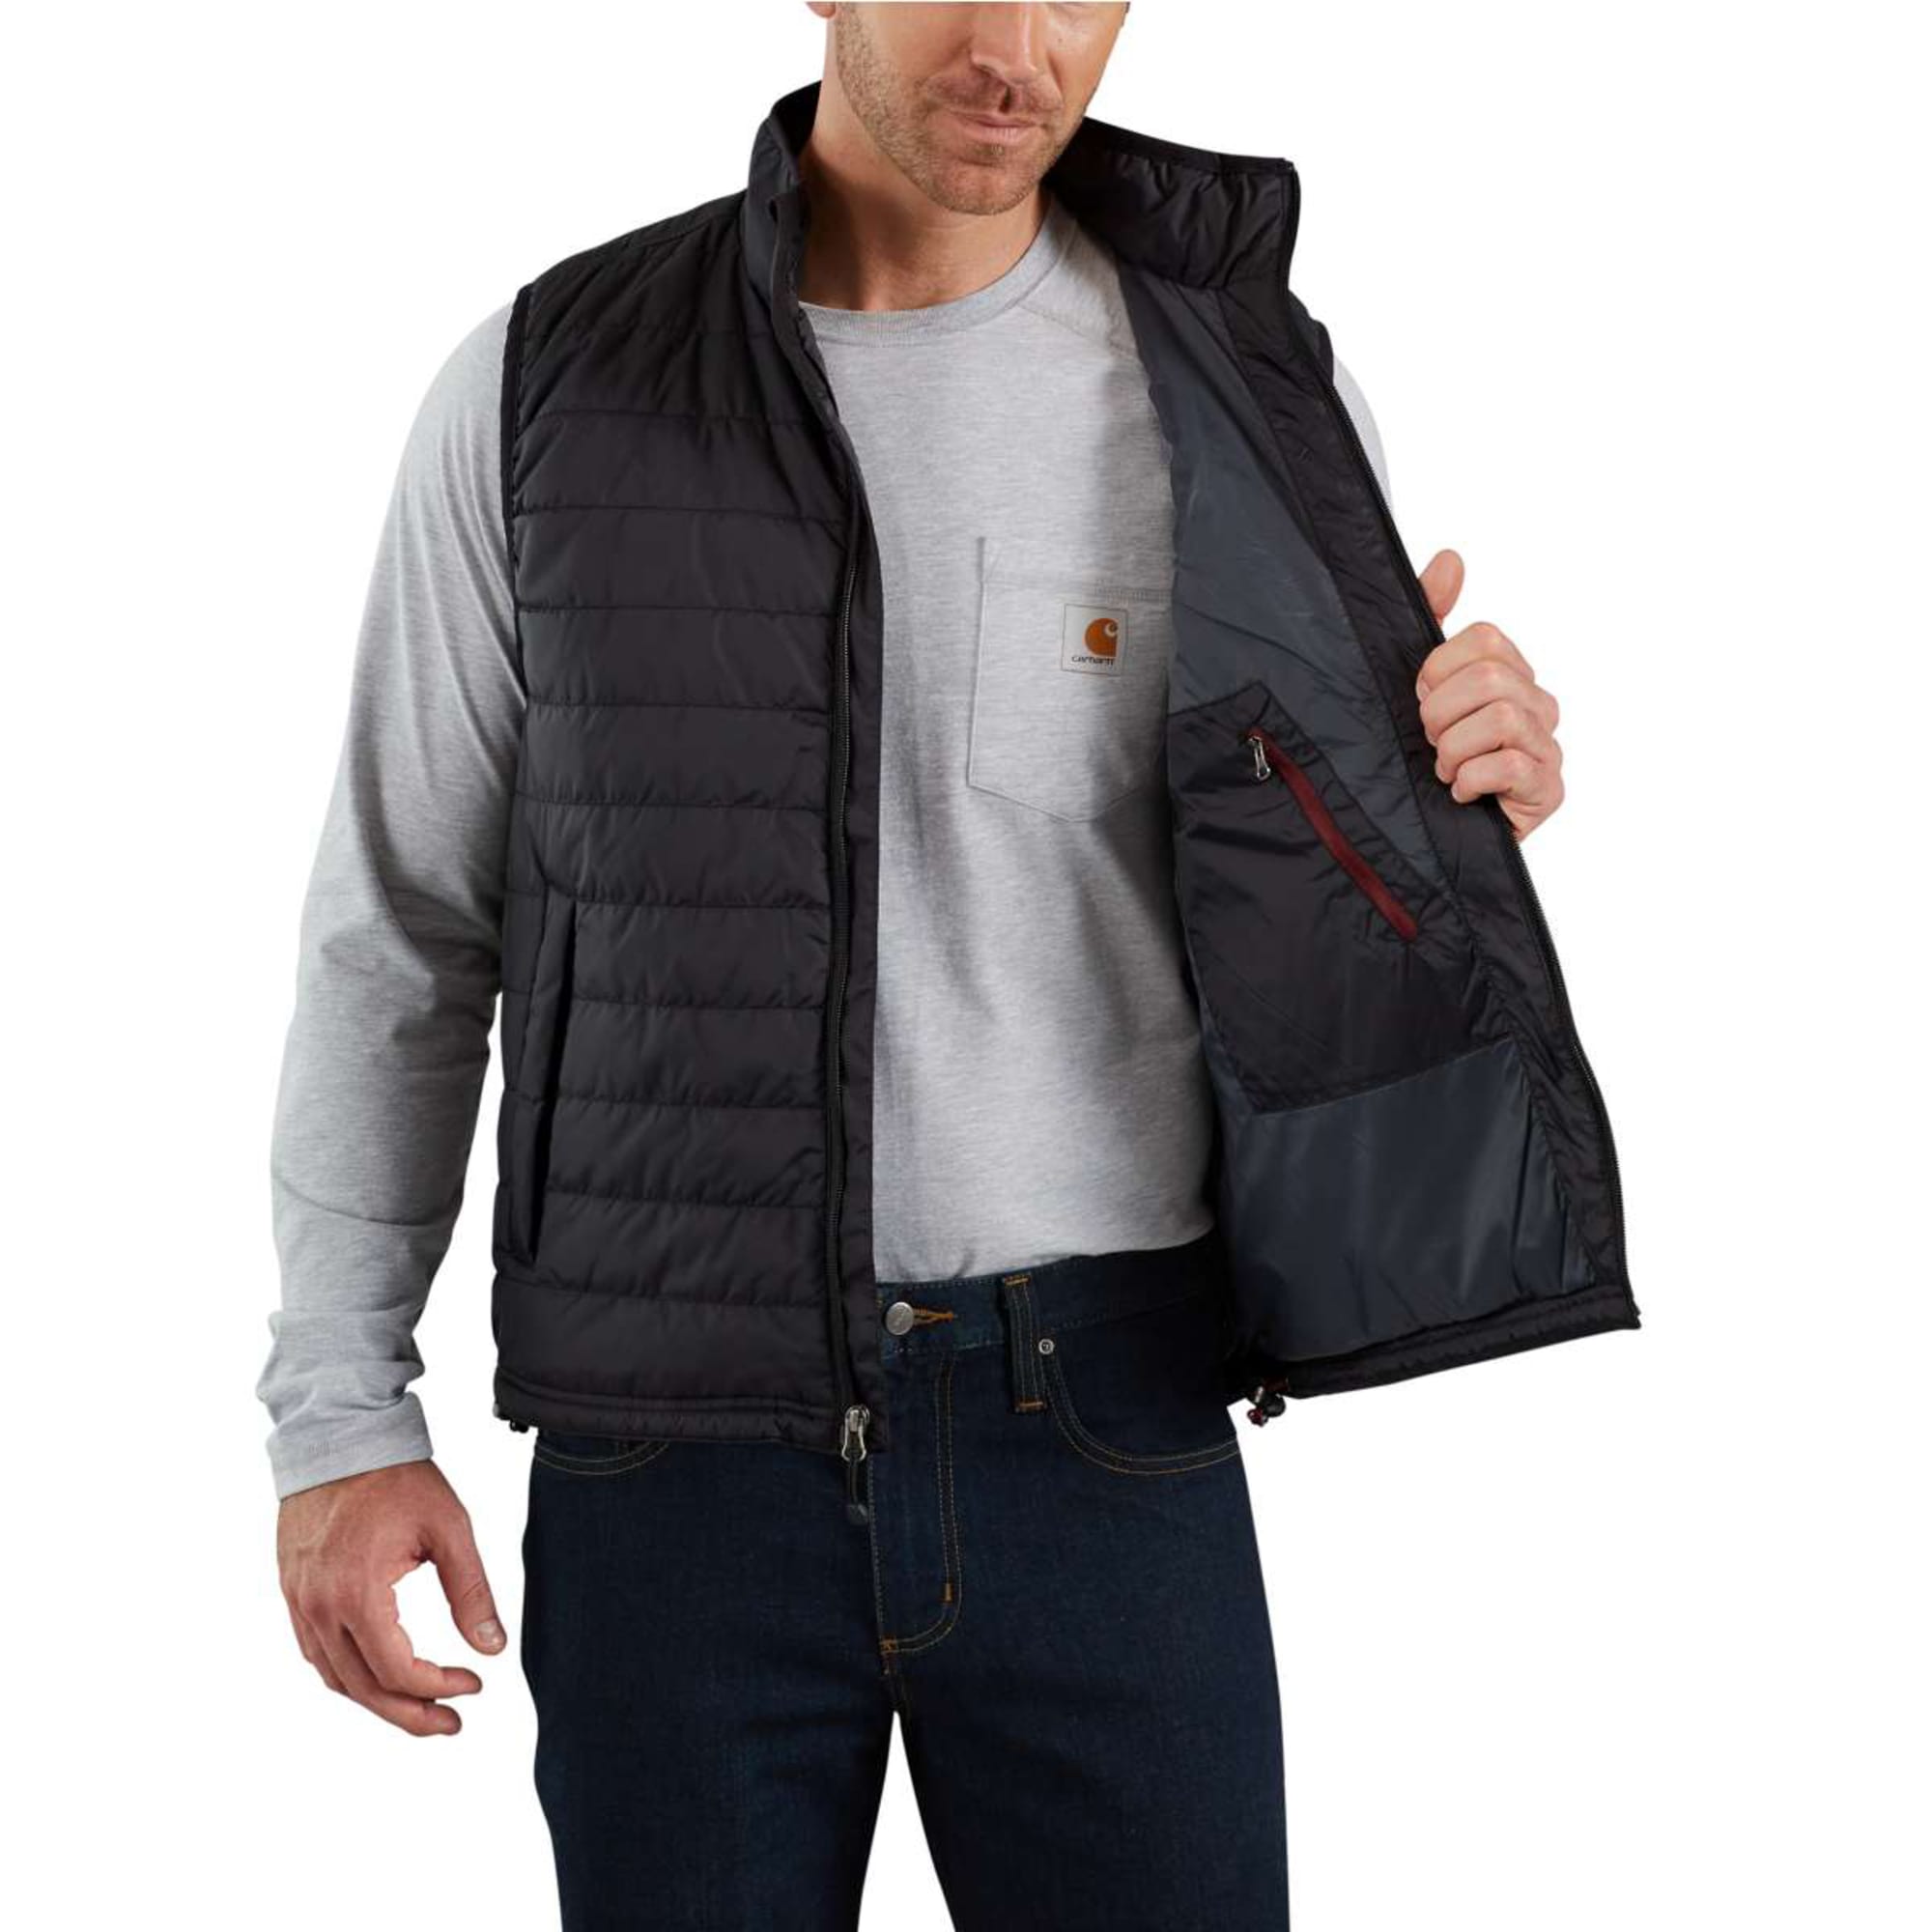 CARHARTT Men's Gilliam Vest